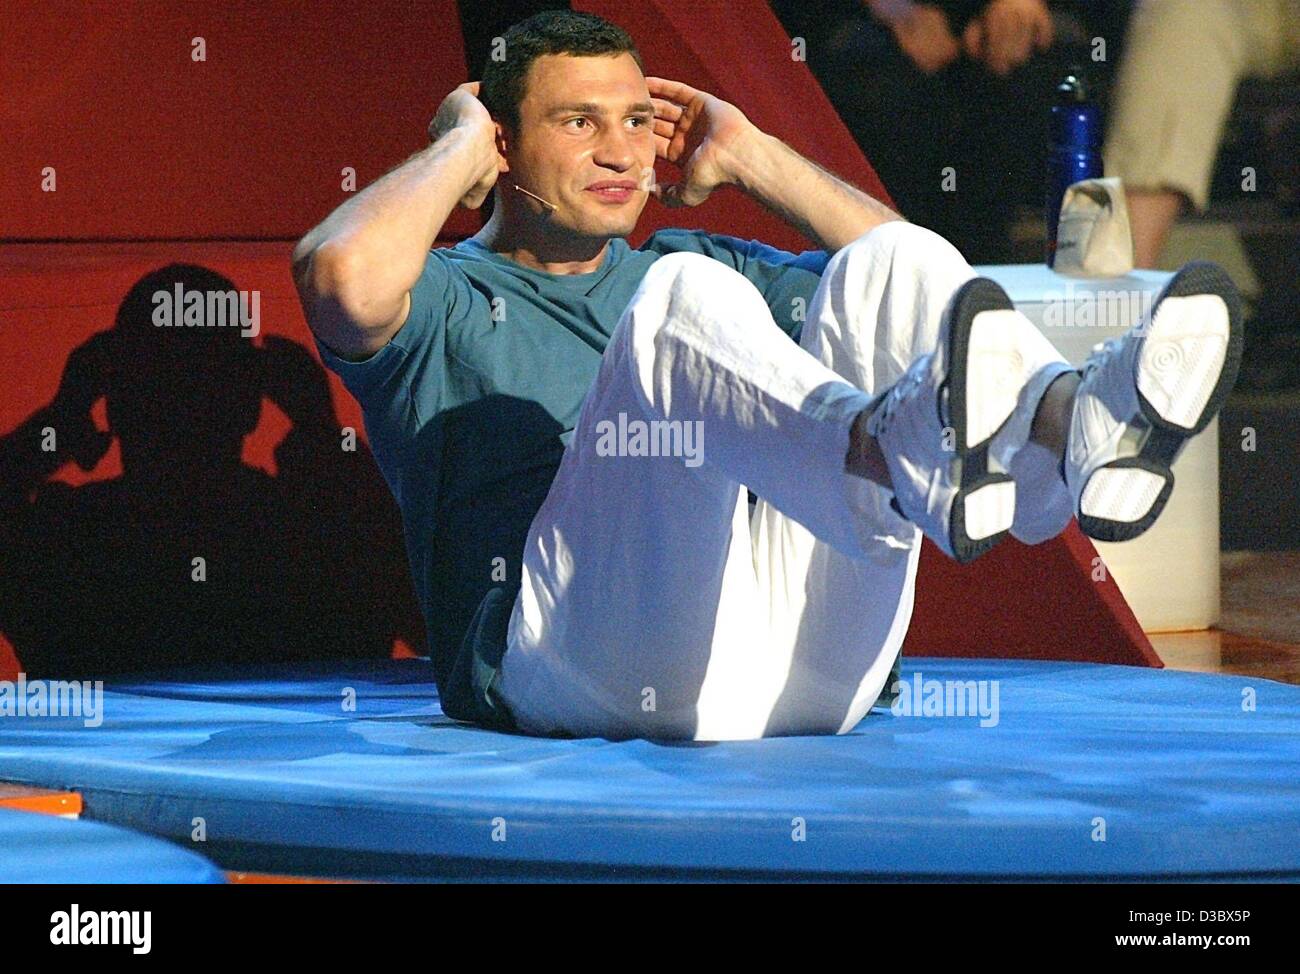 (dpa) - Ukrainian boxer Vitali Klitschko makes sit-ups during a TV show in Munich, 16 August 2003. Stock Photo